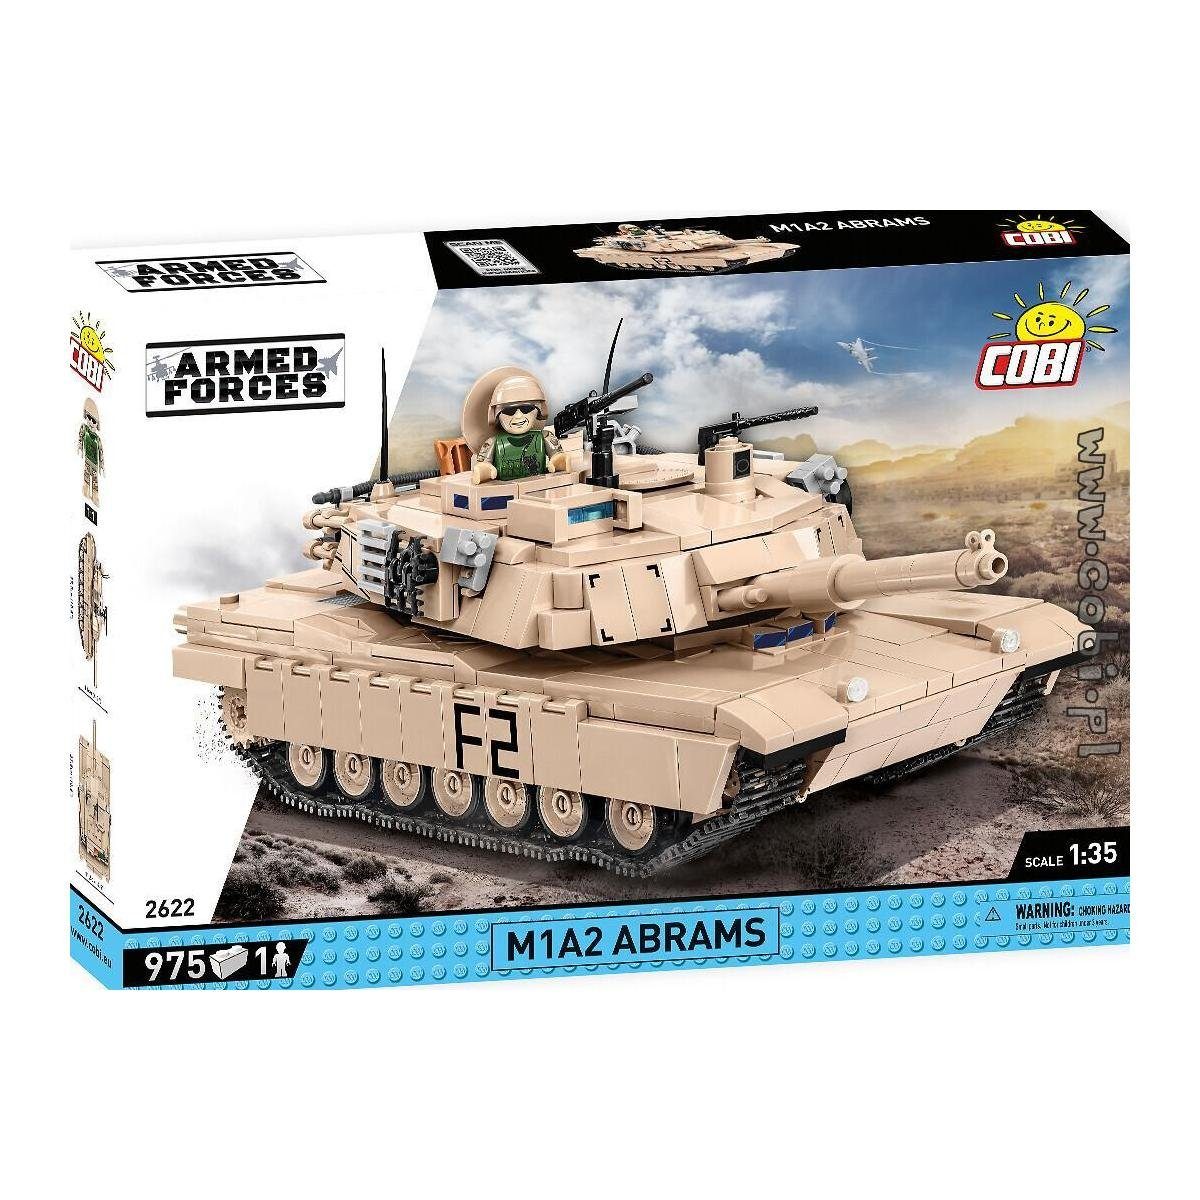 COBI Modellbausatz M1A2 Abrams, Modell, 975 Teile, ab 9 Jahren